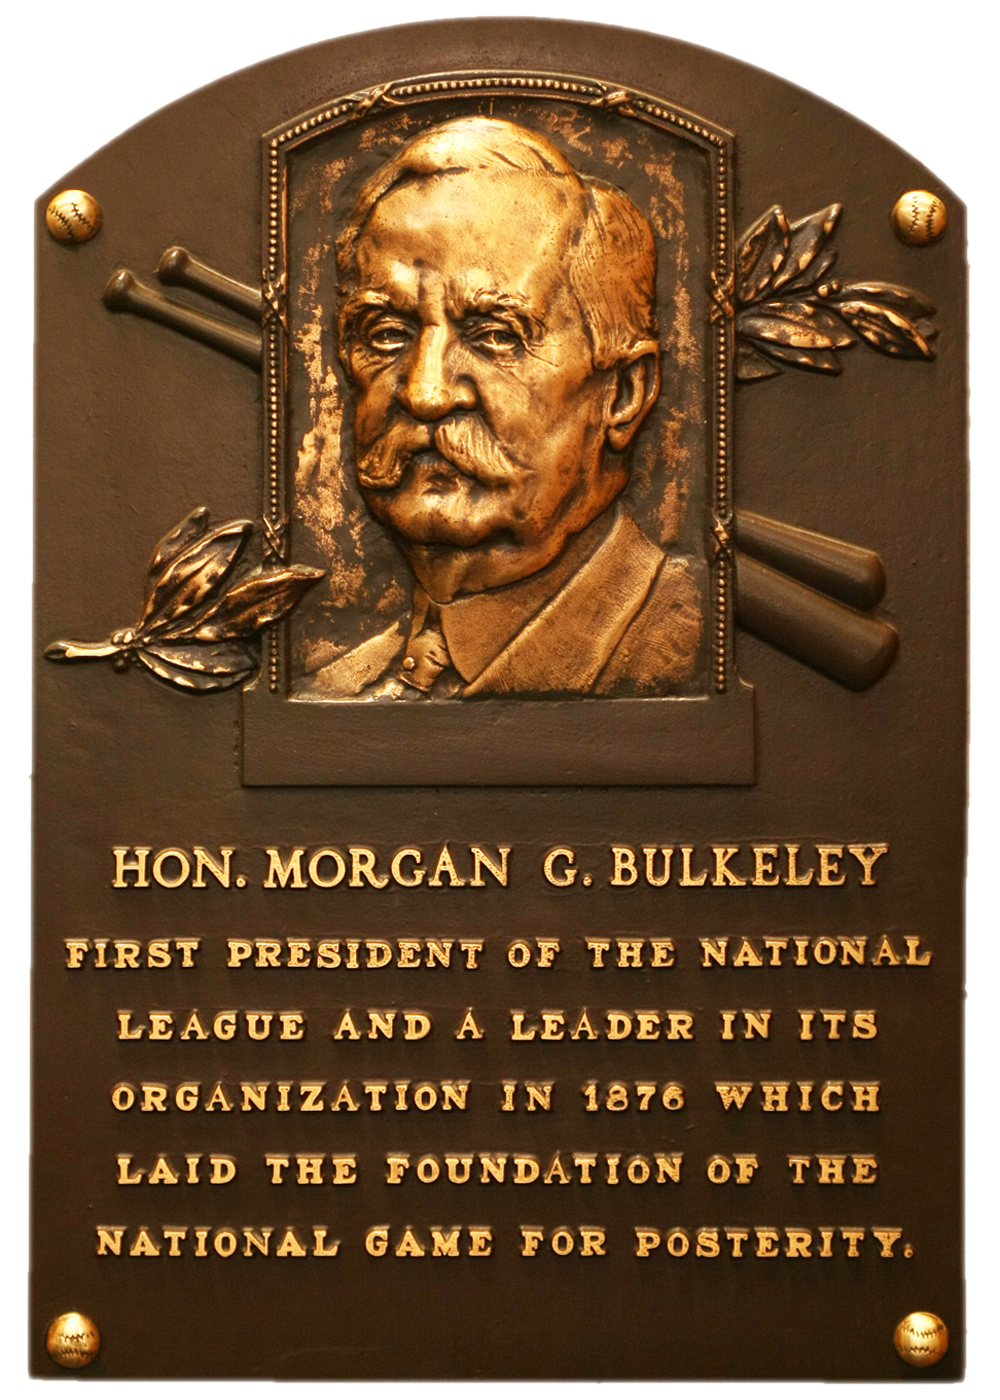 Morgan Bulkeley Hall of Fame plaque